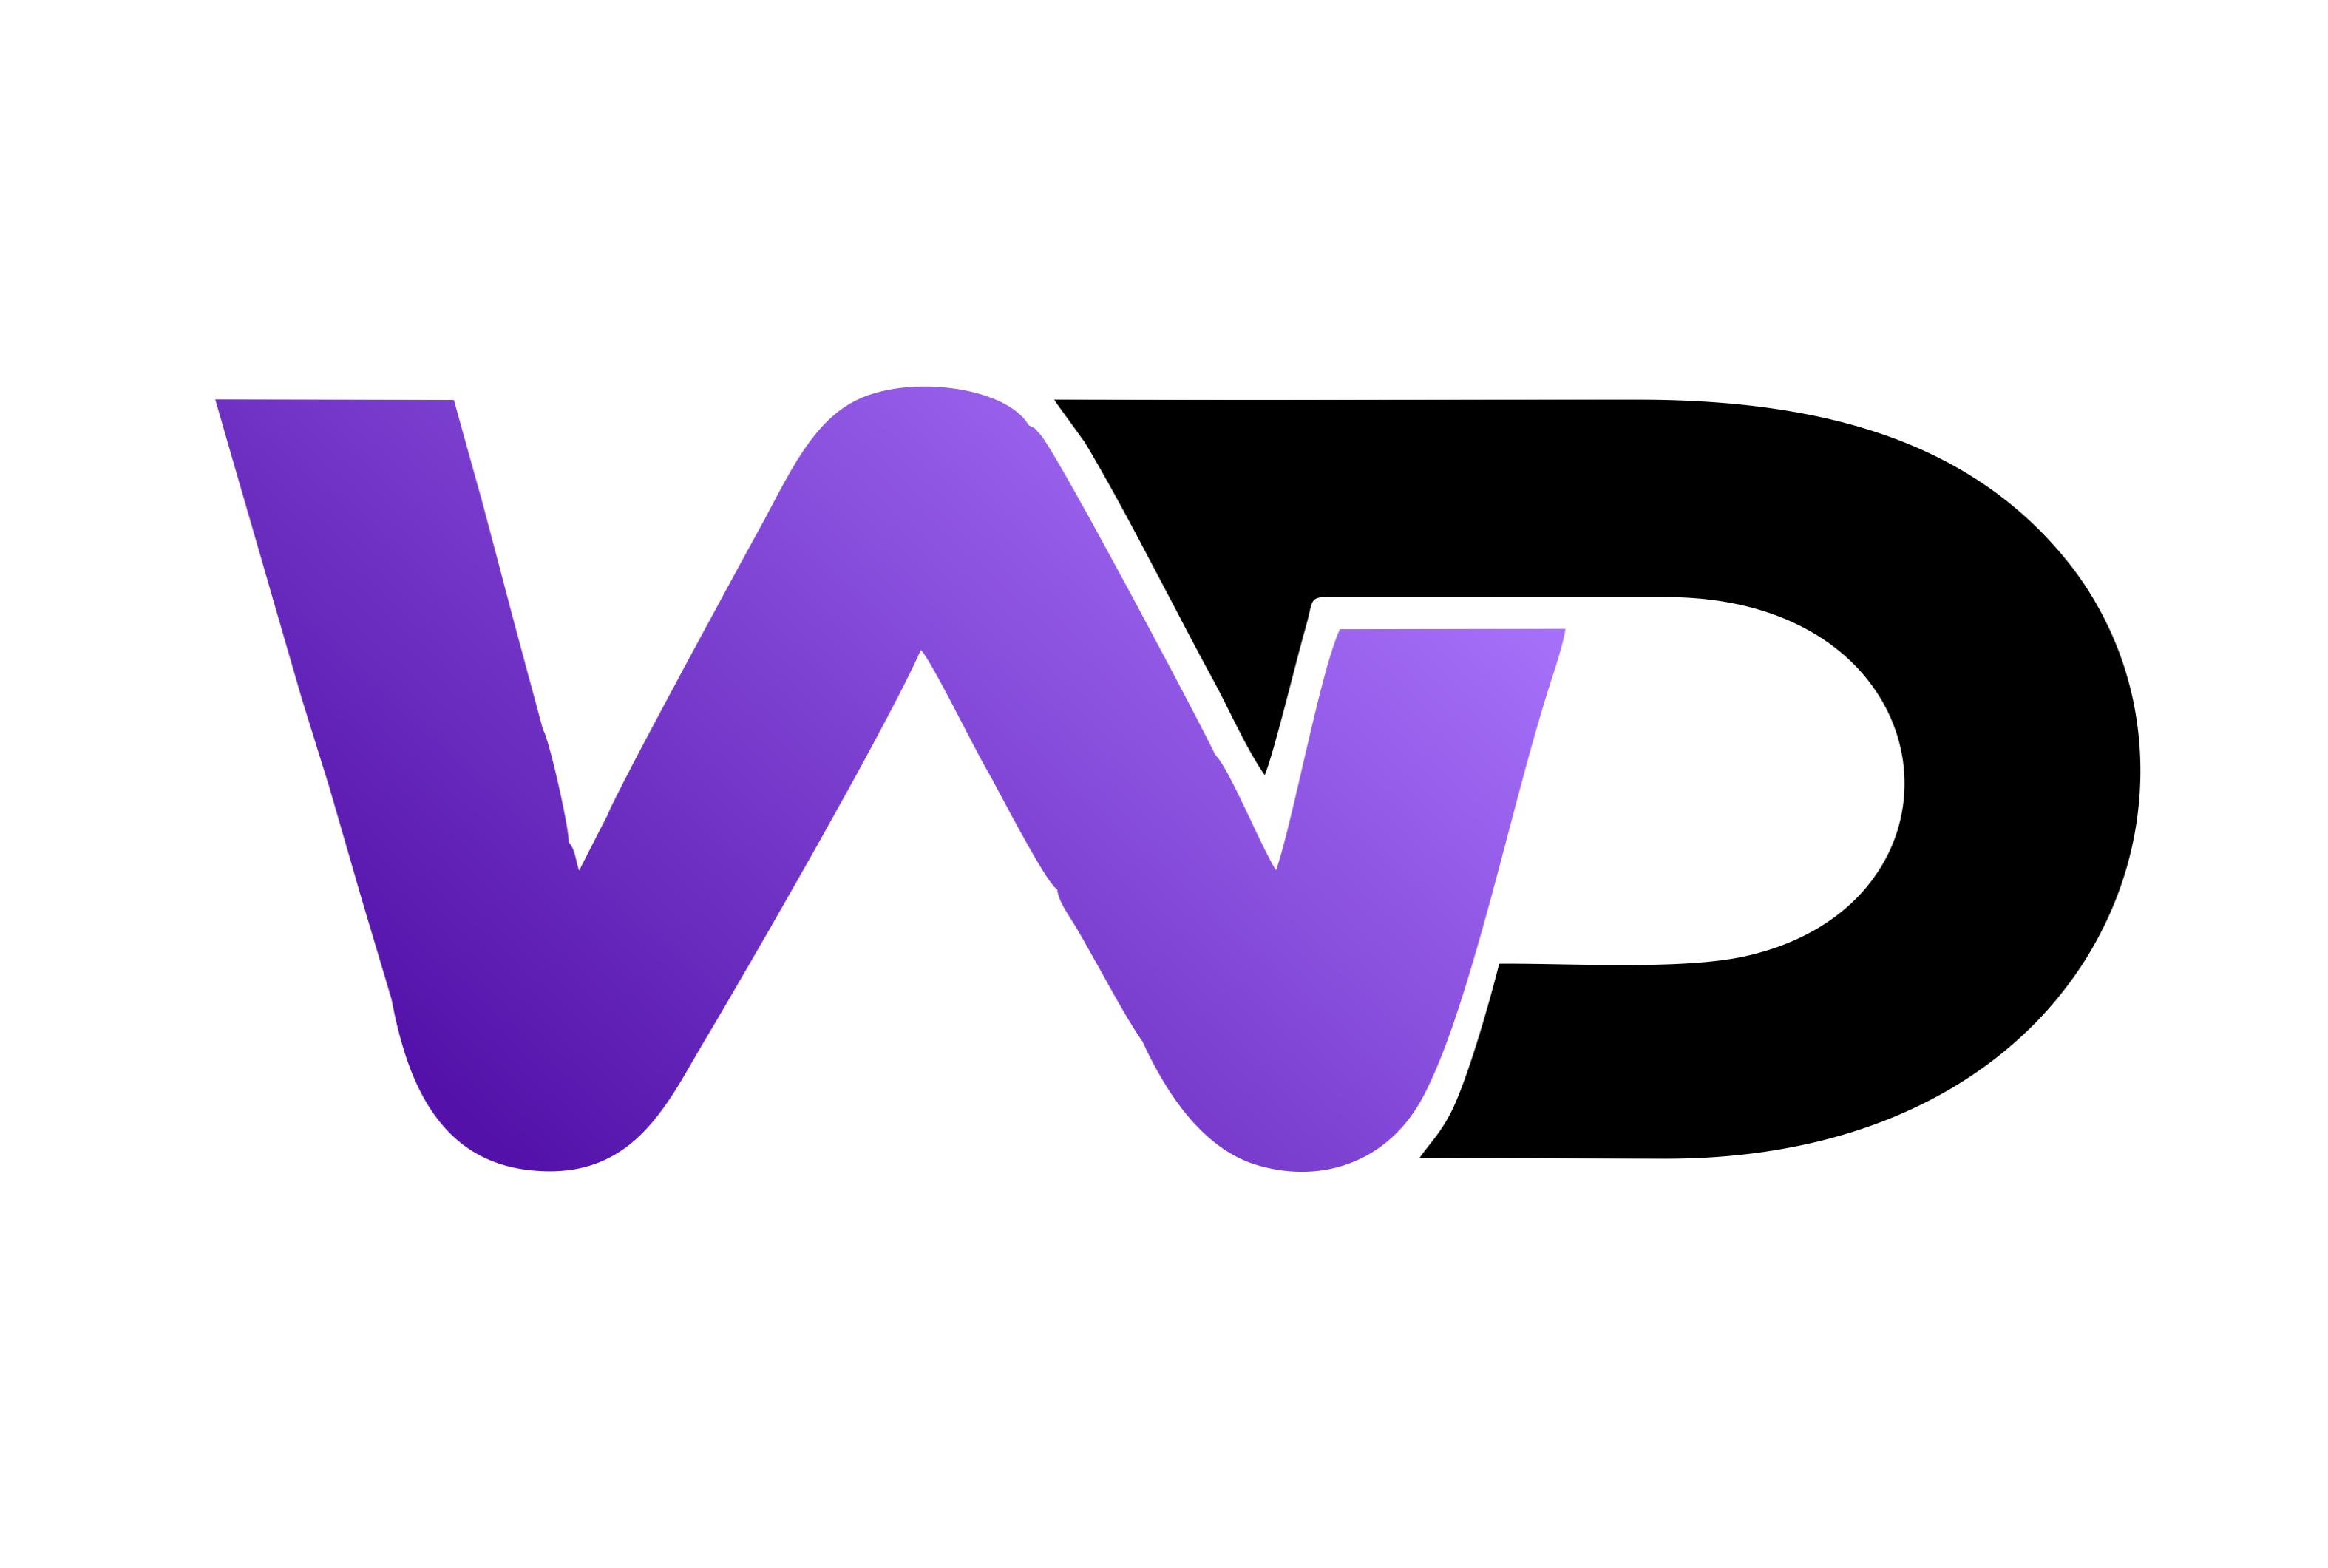 Website Designz Logo